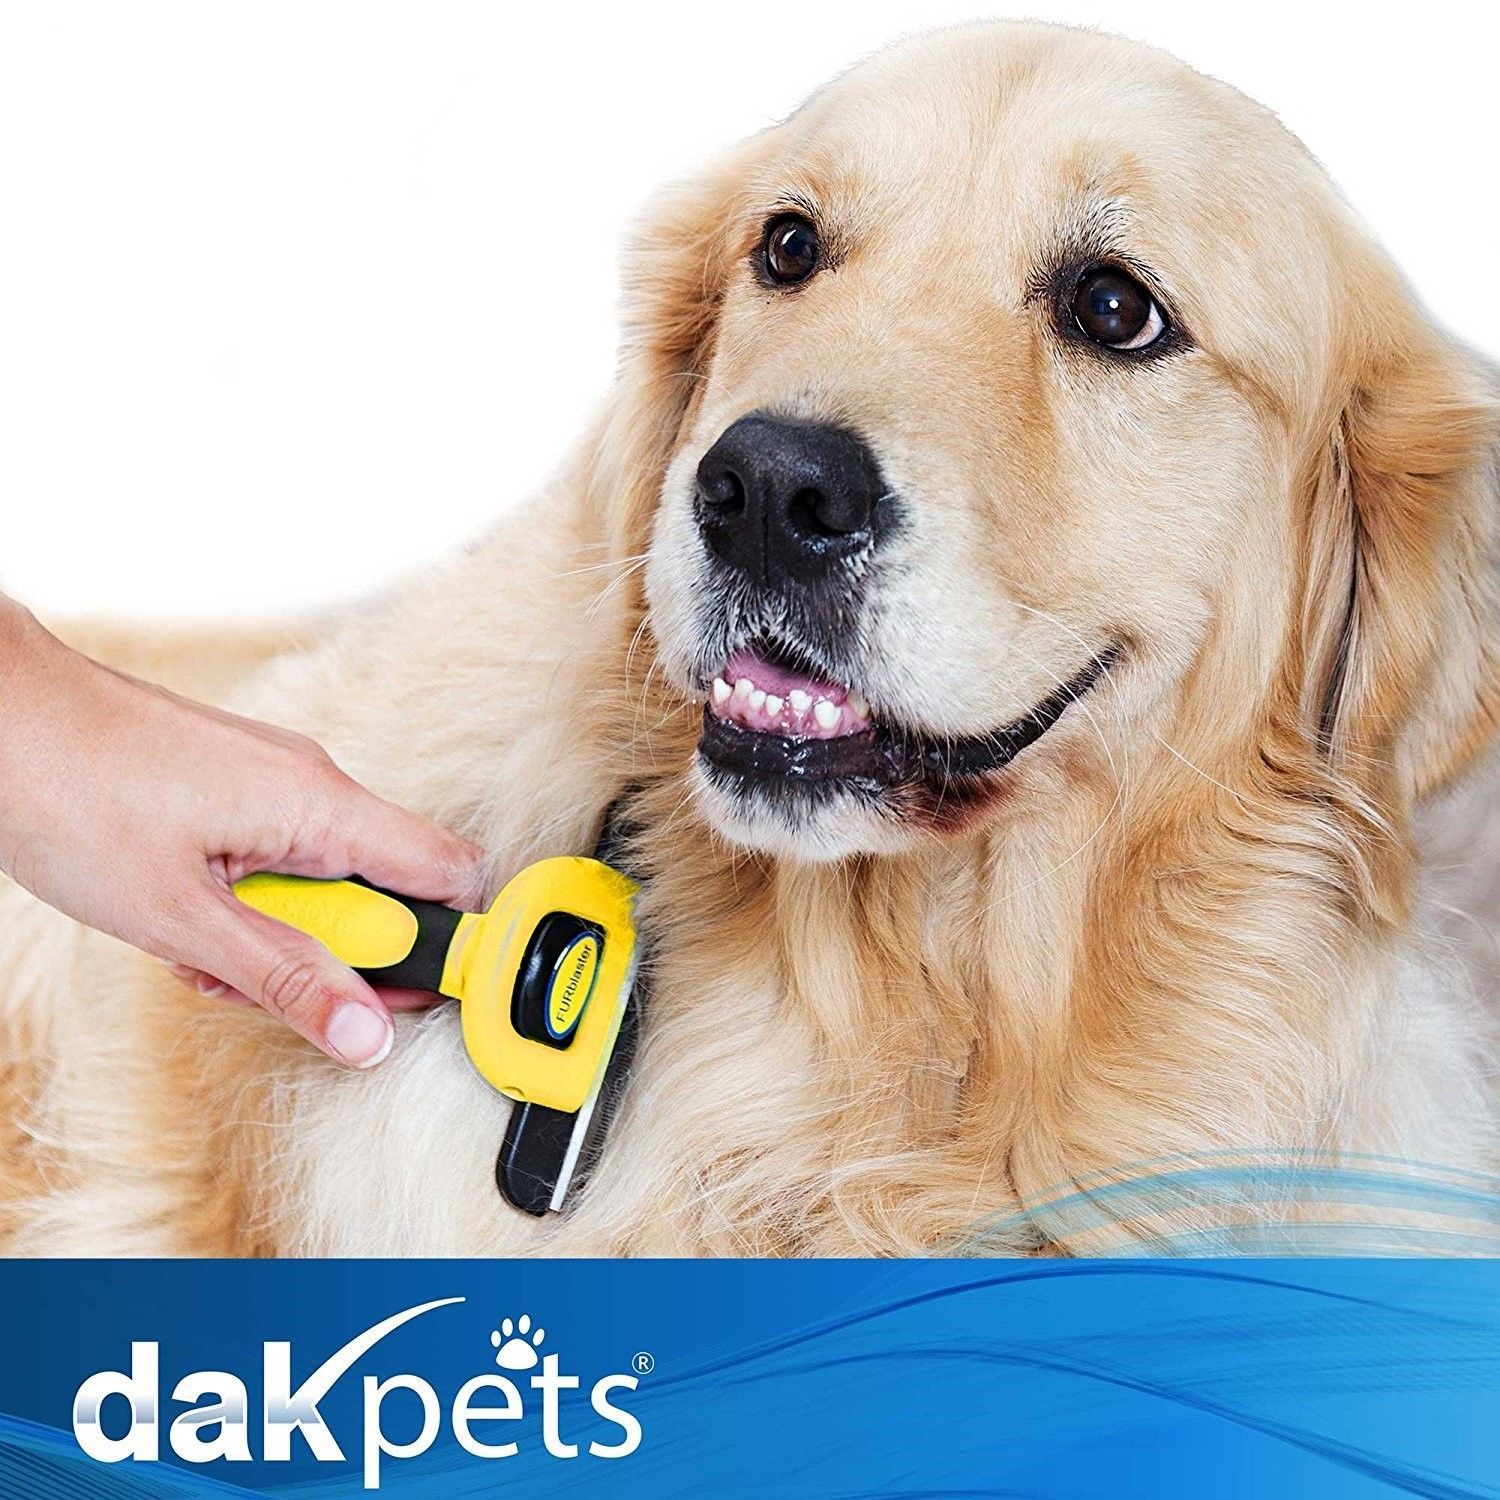  Dog & Cat Brush-Shedding, Groom,Pet, Blade, Hair, Health, Deshedding, Tool,Comb - $24.49